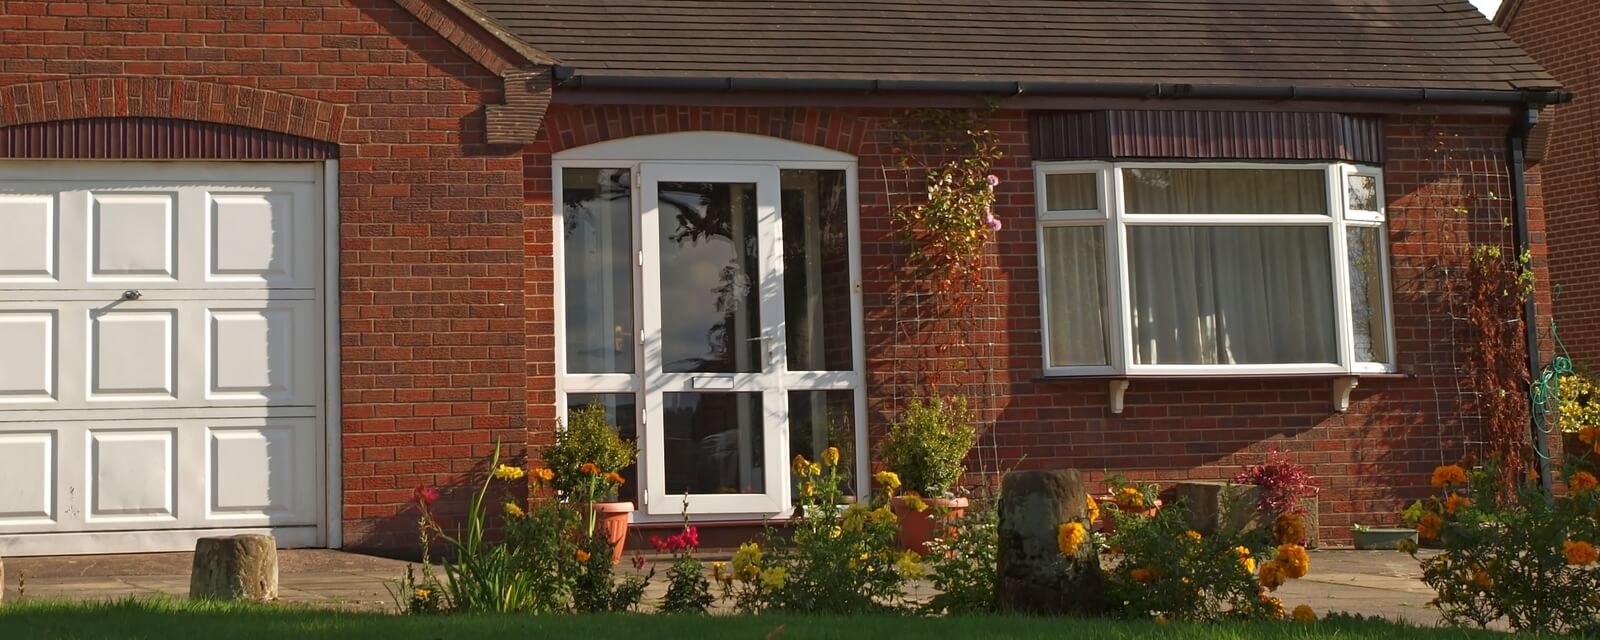 Coleshill Windows & Doors Ltd